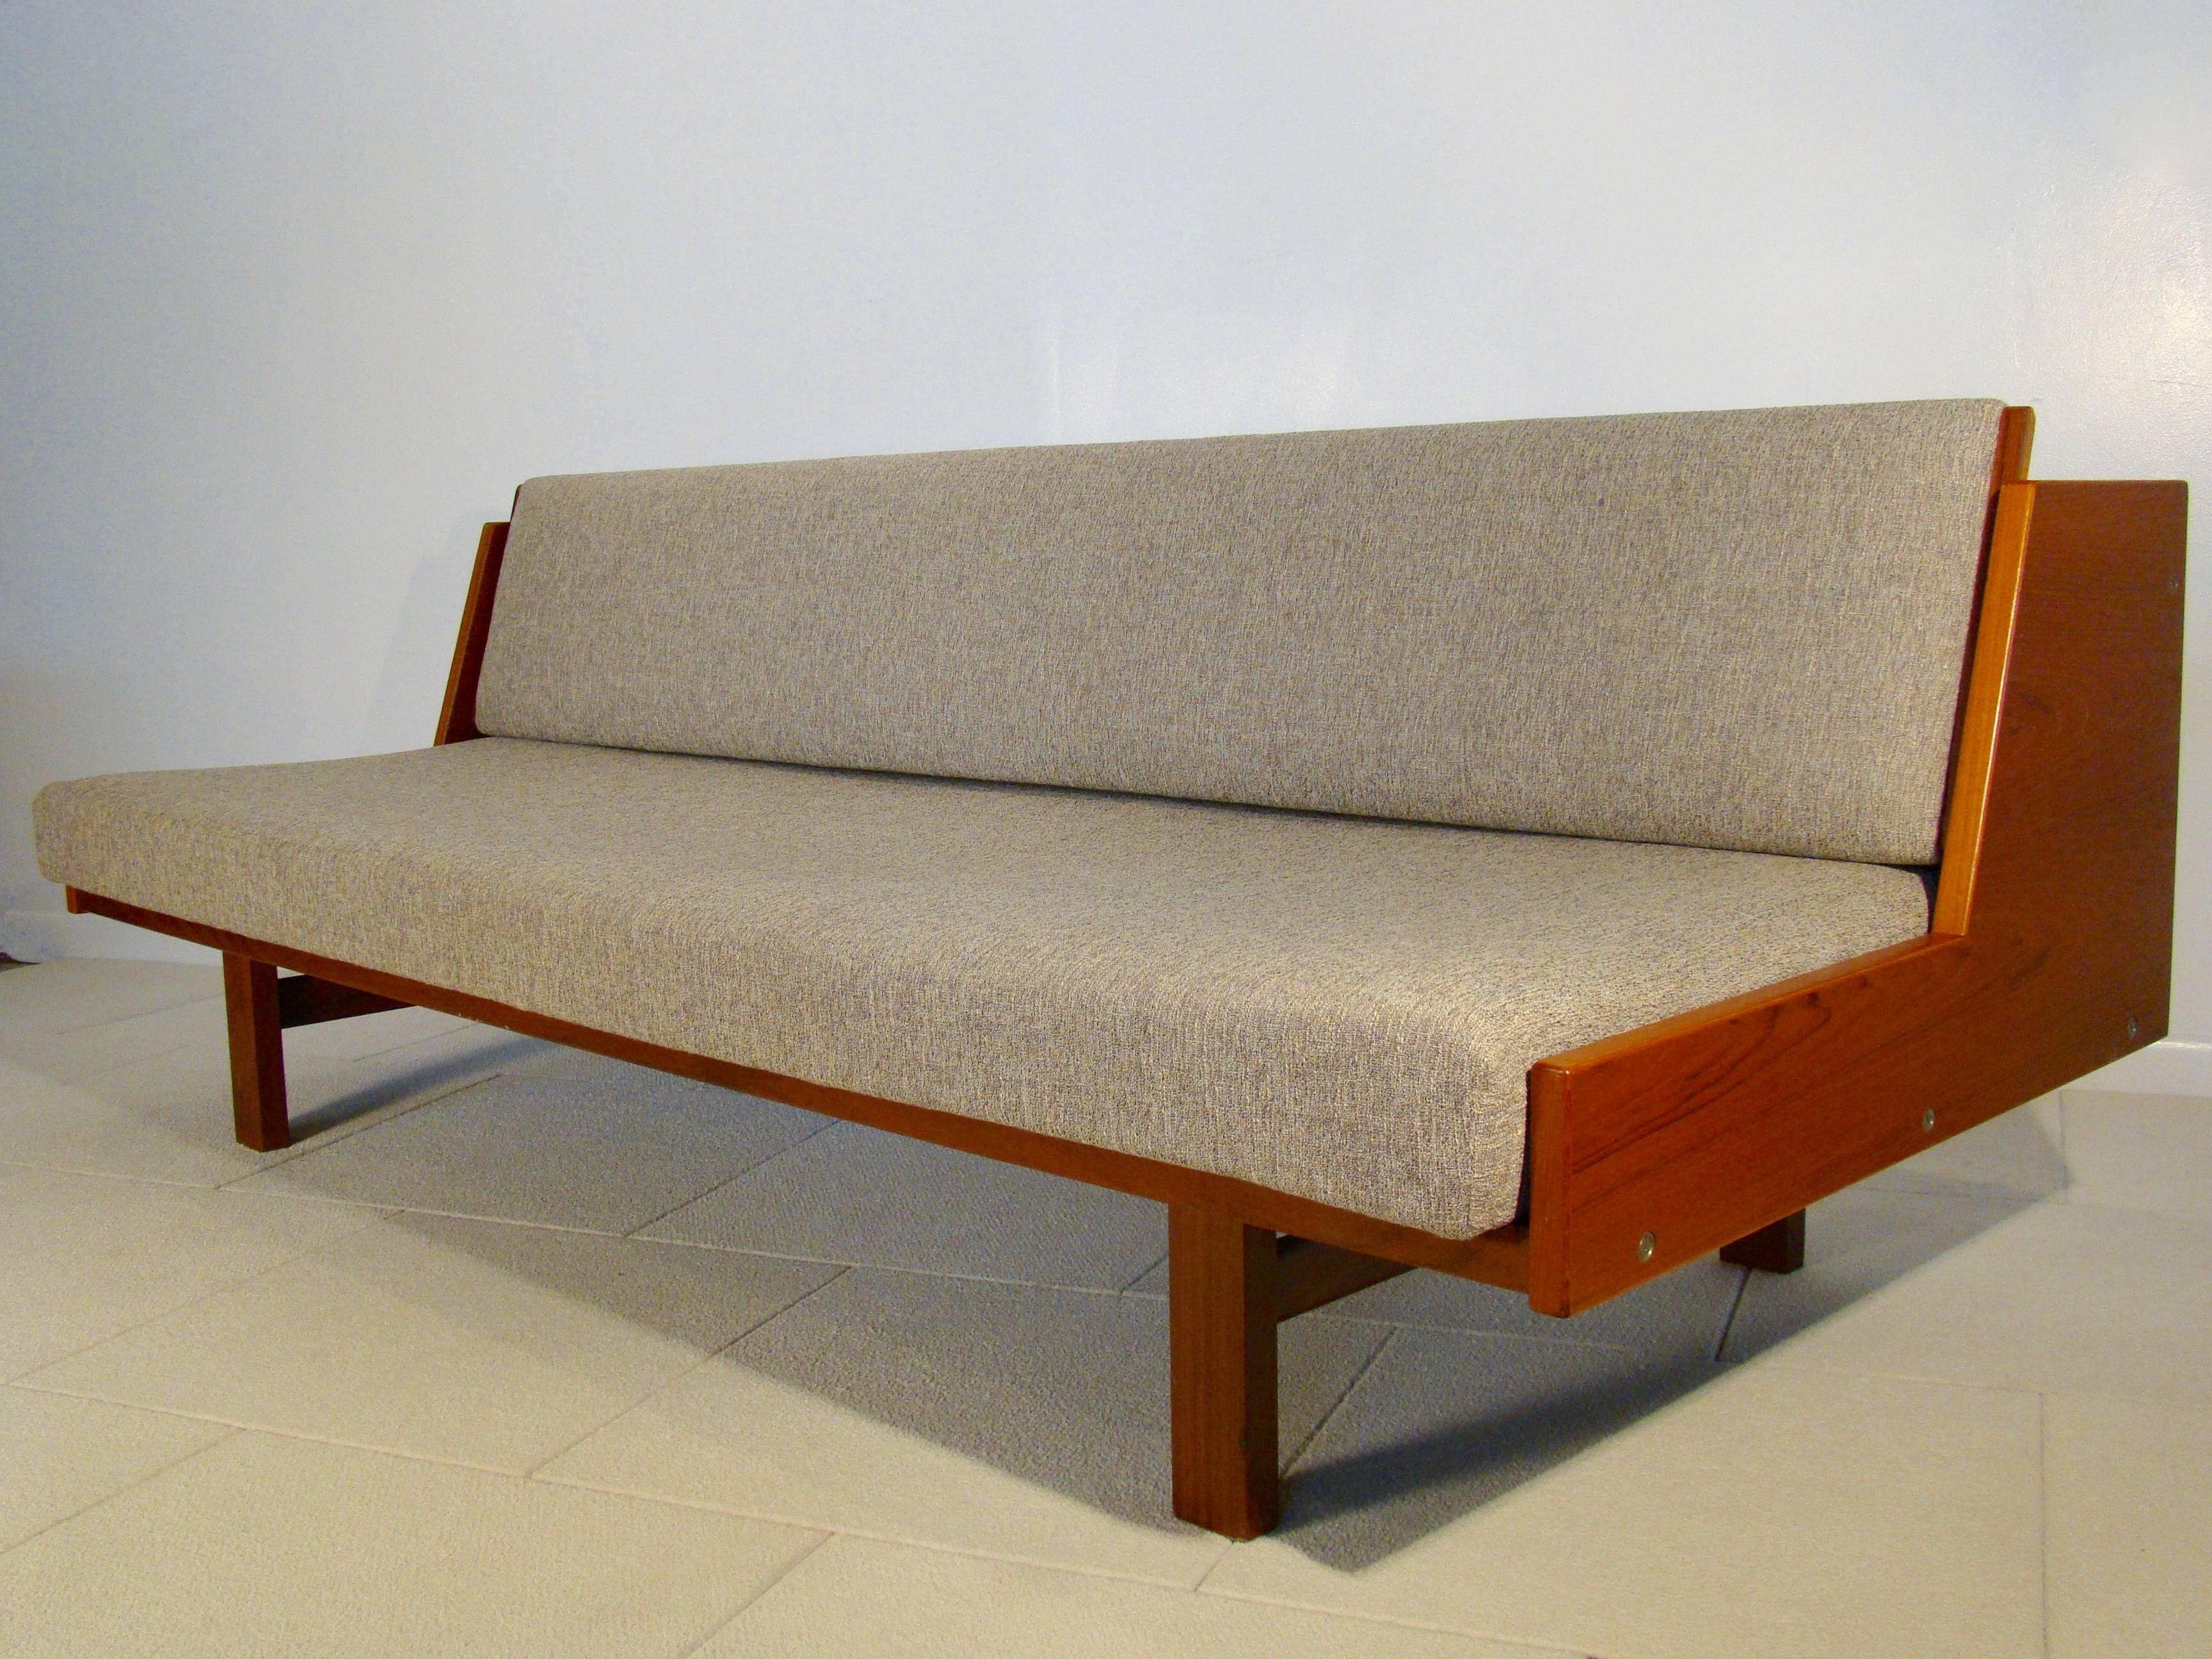 Fabric Vintage Hans Wegner Sofa or Daybed in Teak and Walnut for Getama, Denmark